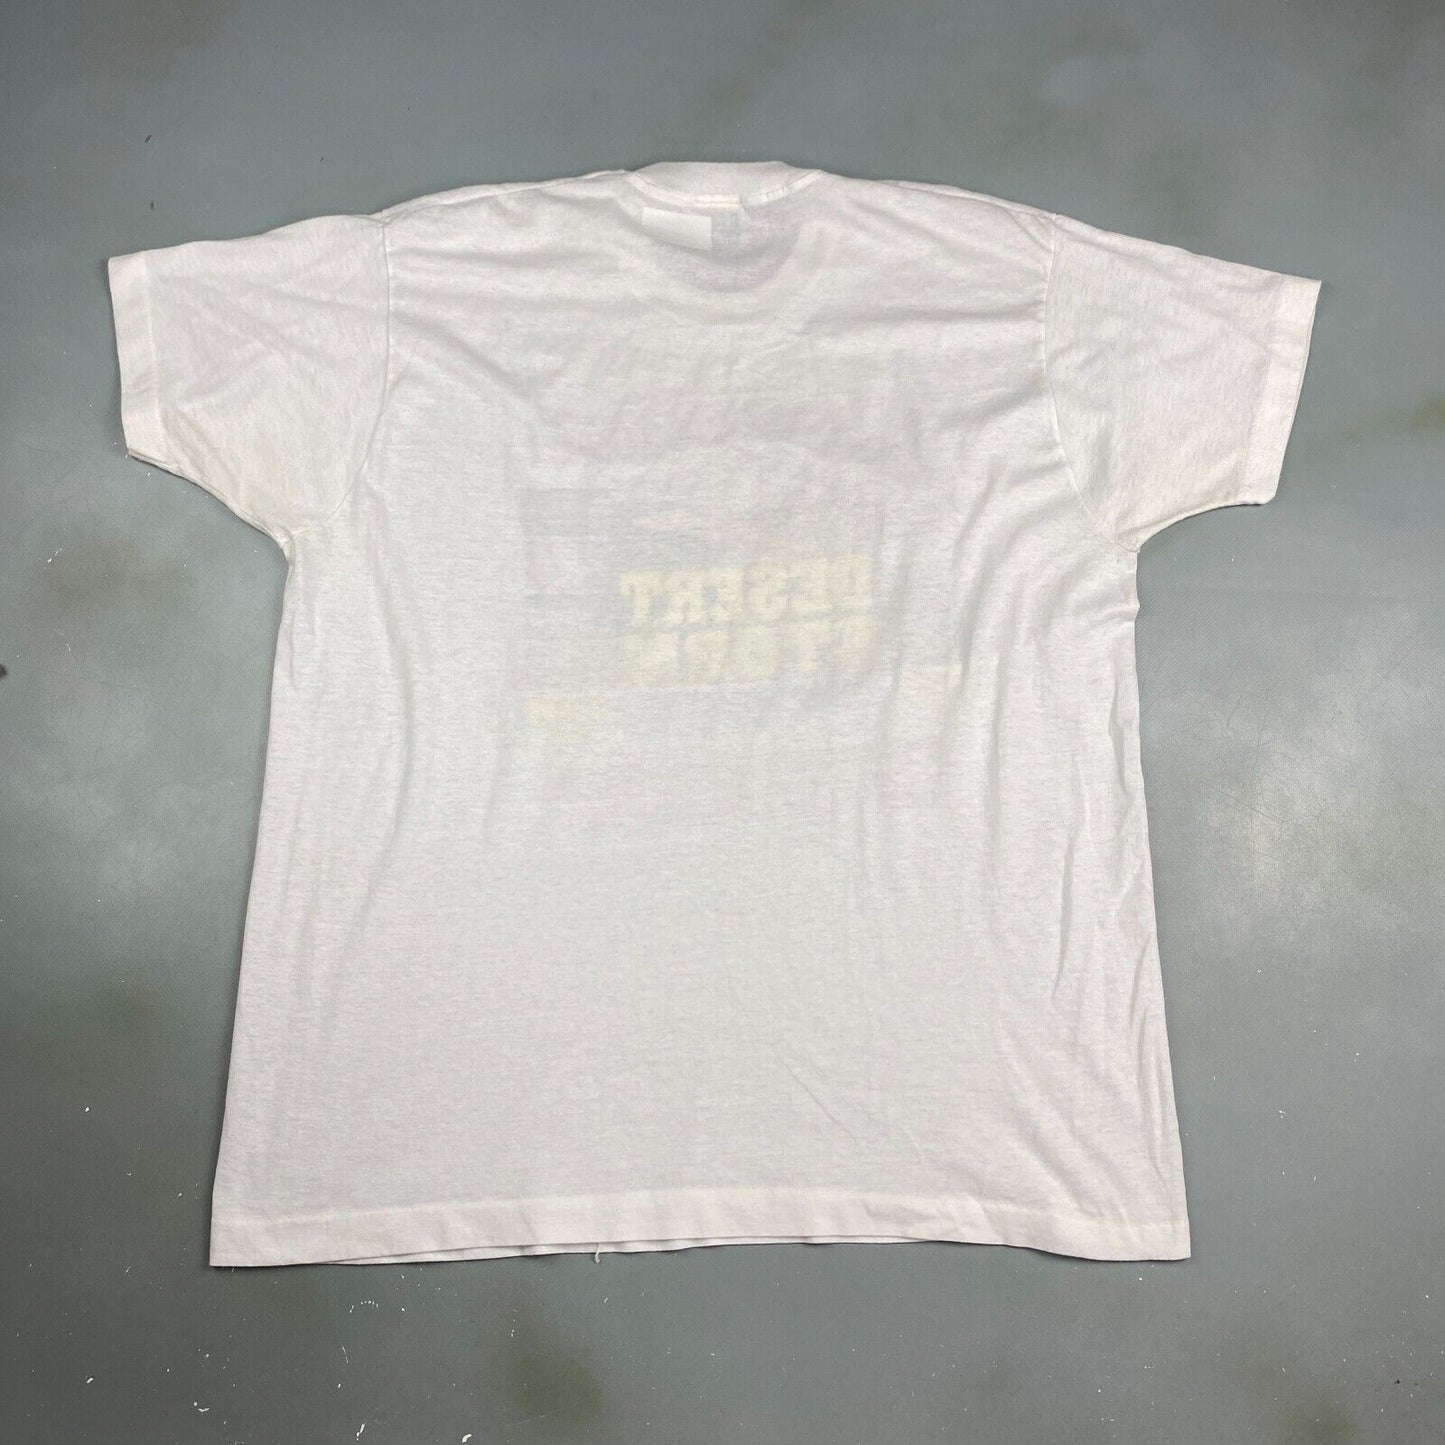 VINTAGE 90s Freedom Fighters Desert Storm White T-Shirt sz XL Men Adult